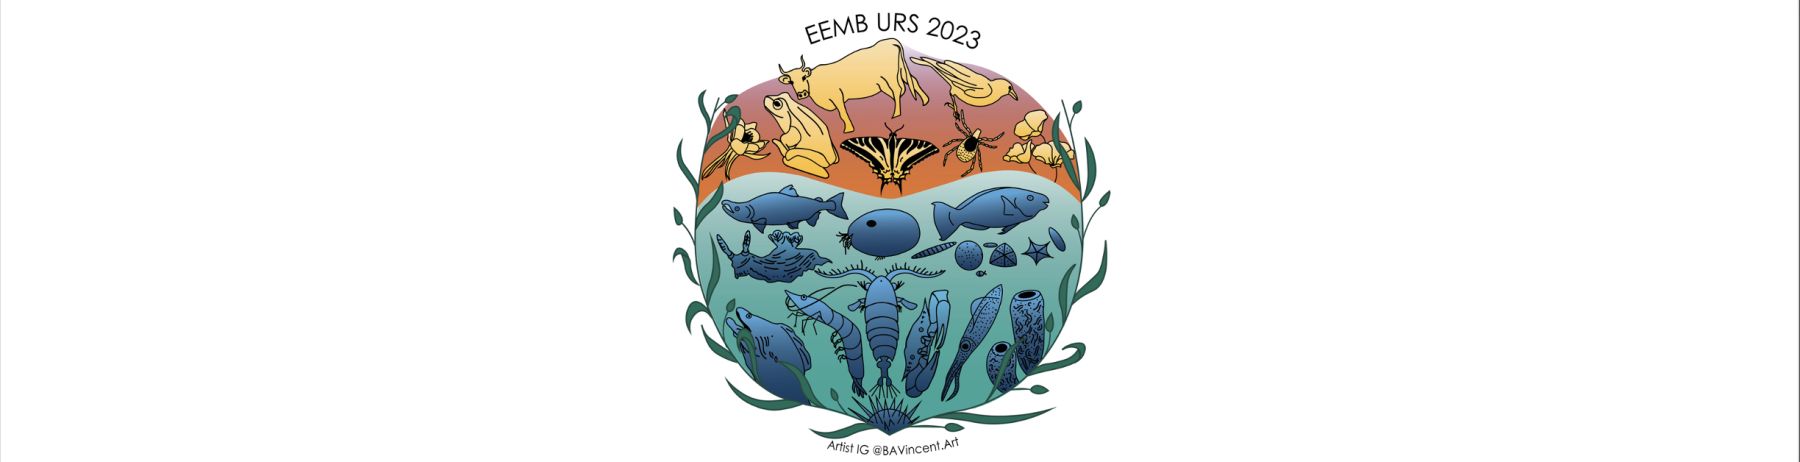 EEMB-URS logo